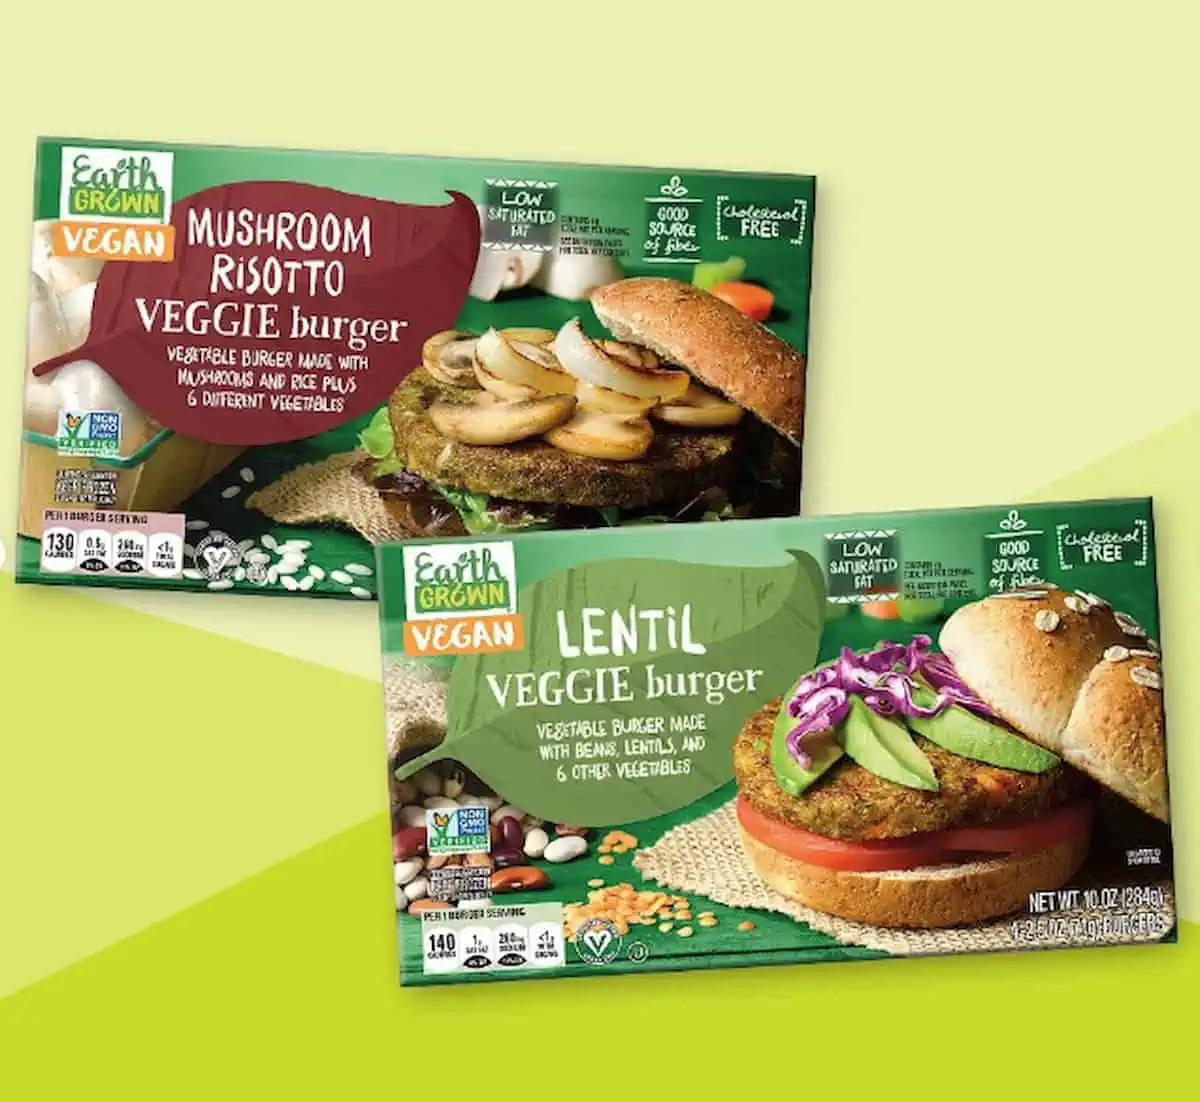 Two packages of Earth Grown vegan burgers.